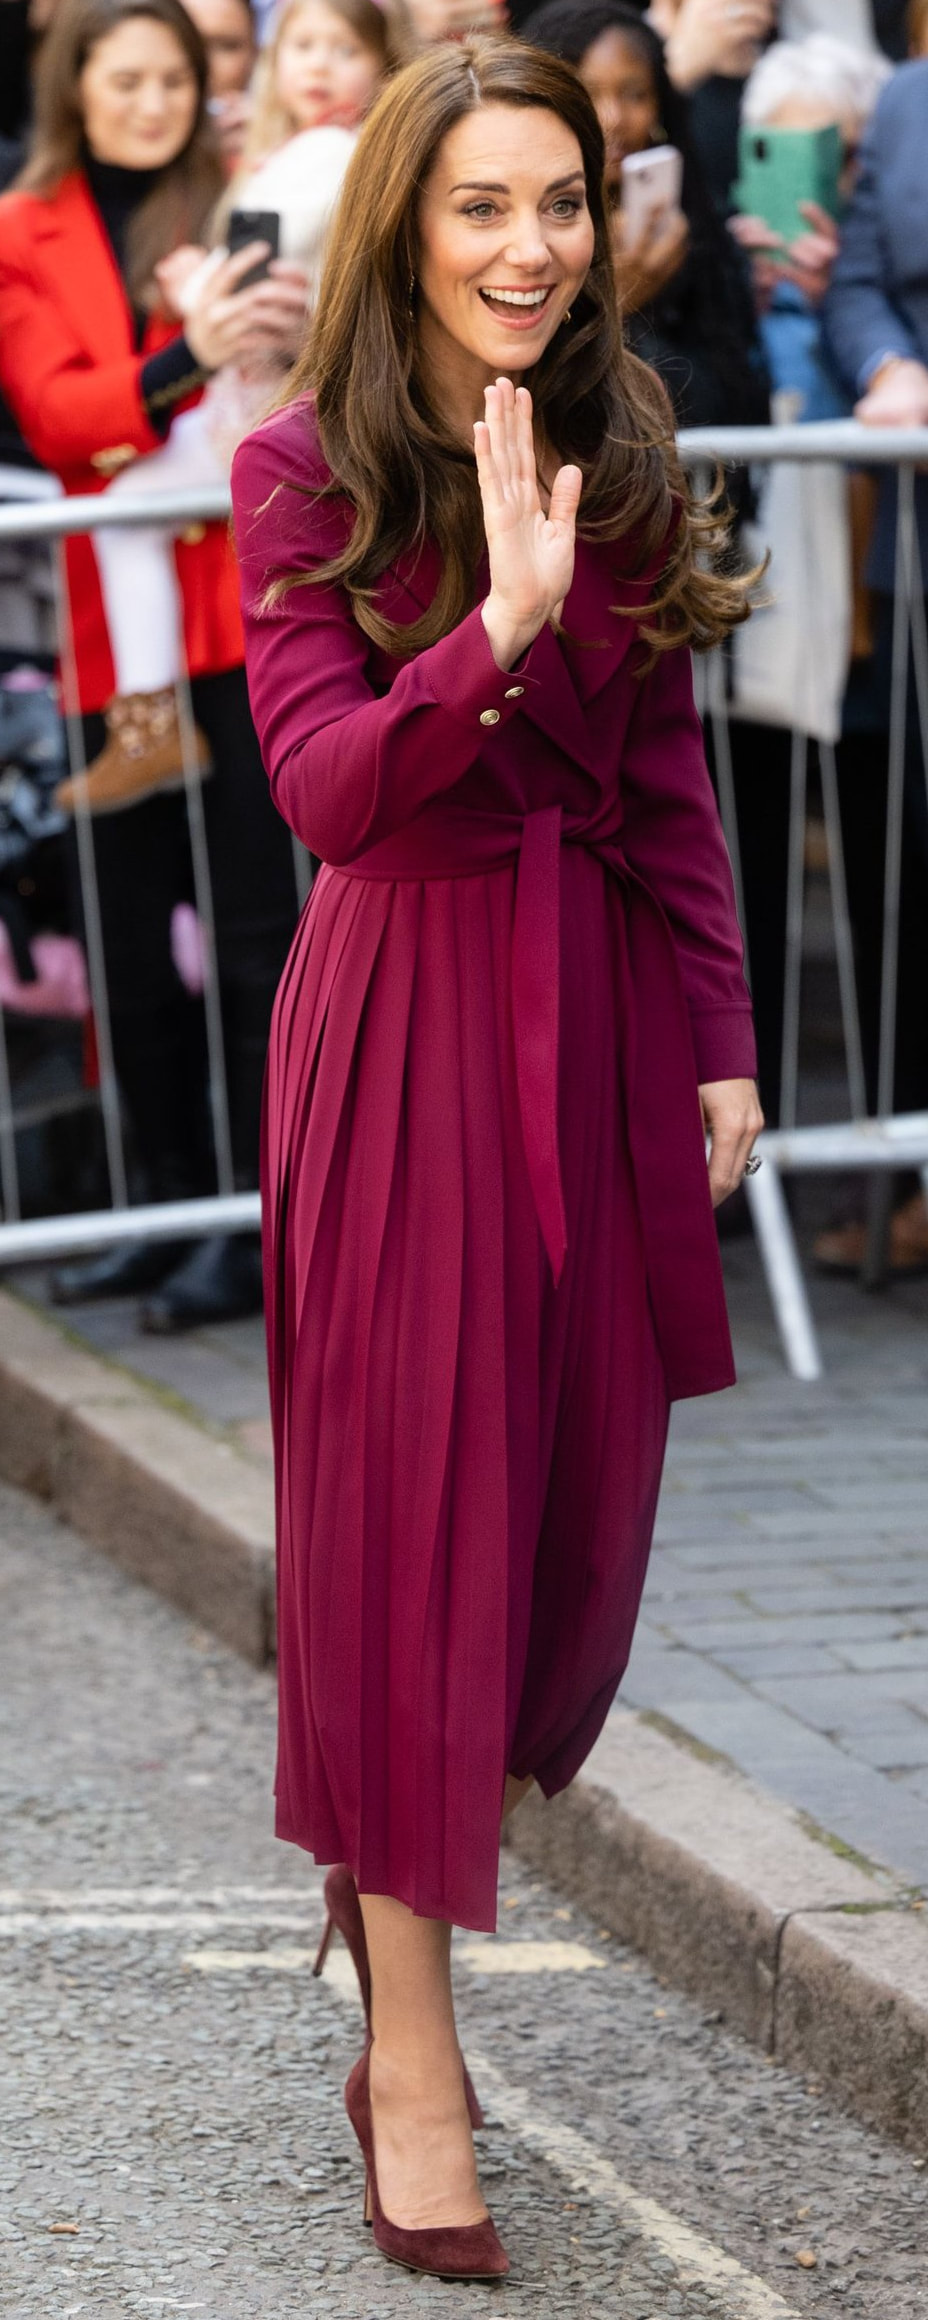 Karen Millen Long Sleeve Pleated Midi Trench Dress in Merlot as seen on Kate Middleton, Princess of Wales